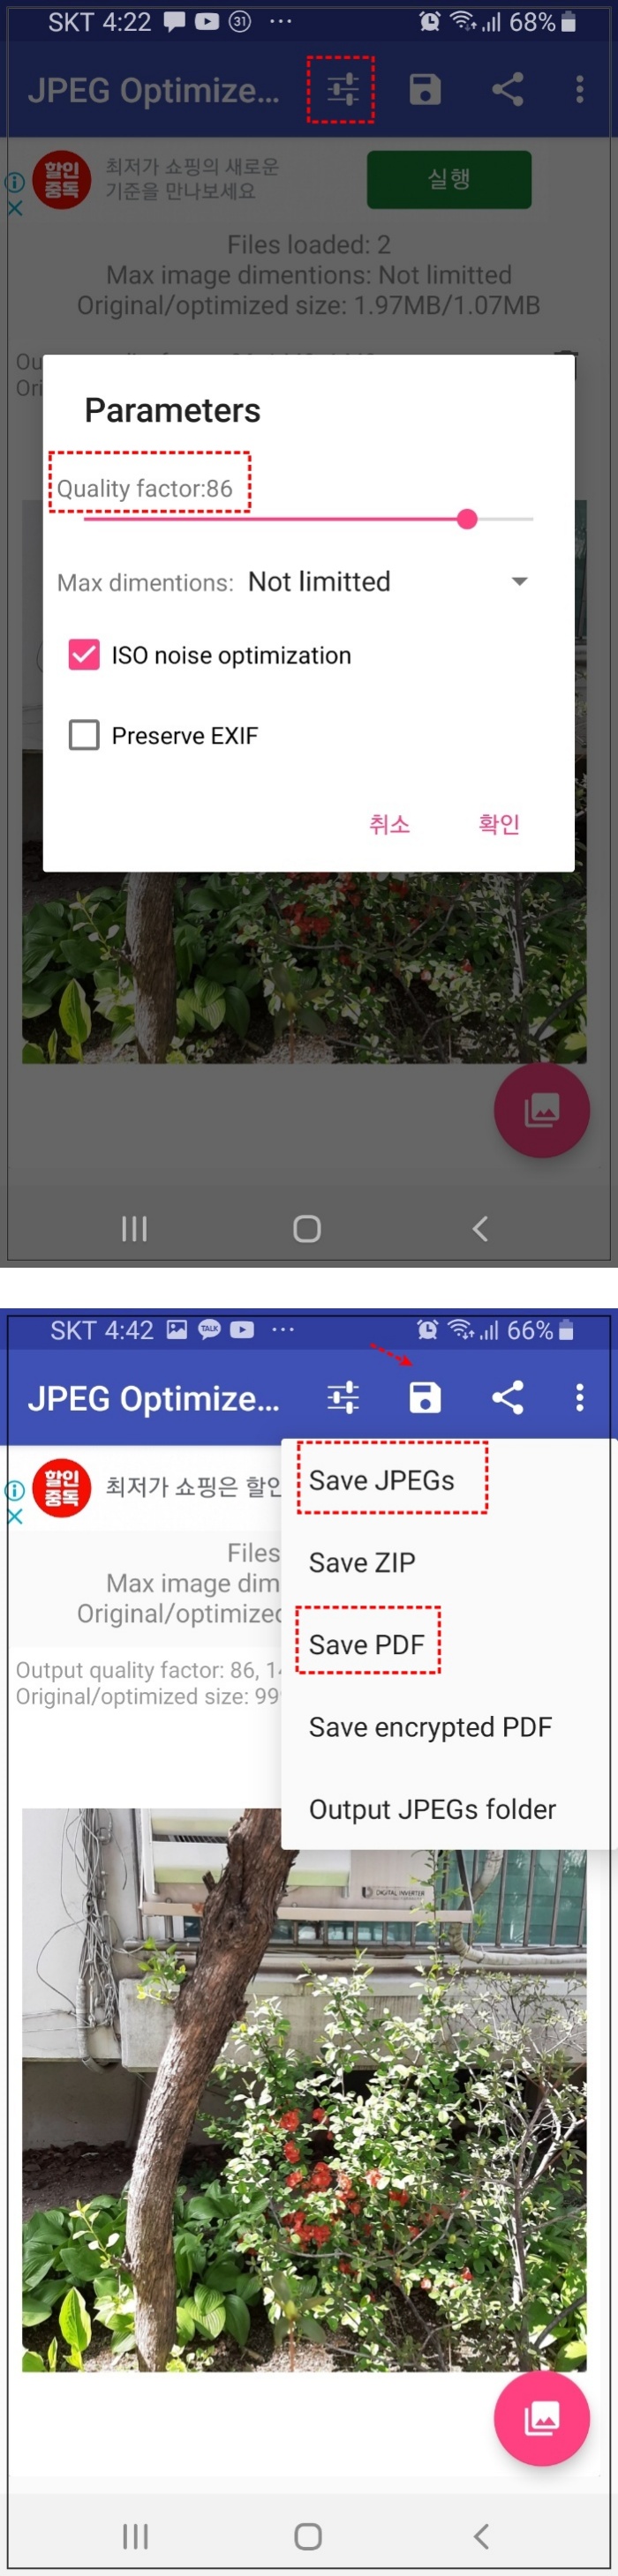 JPEG-Optimizer-사용법-설명-화면